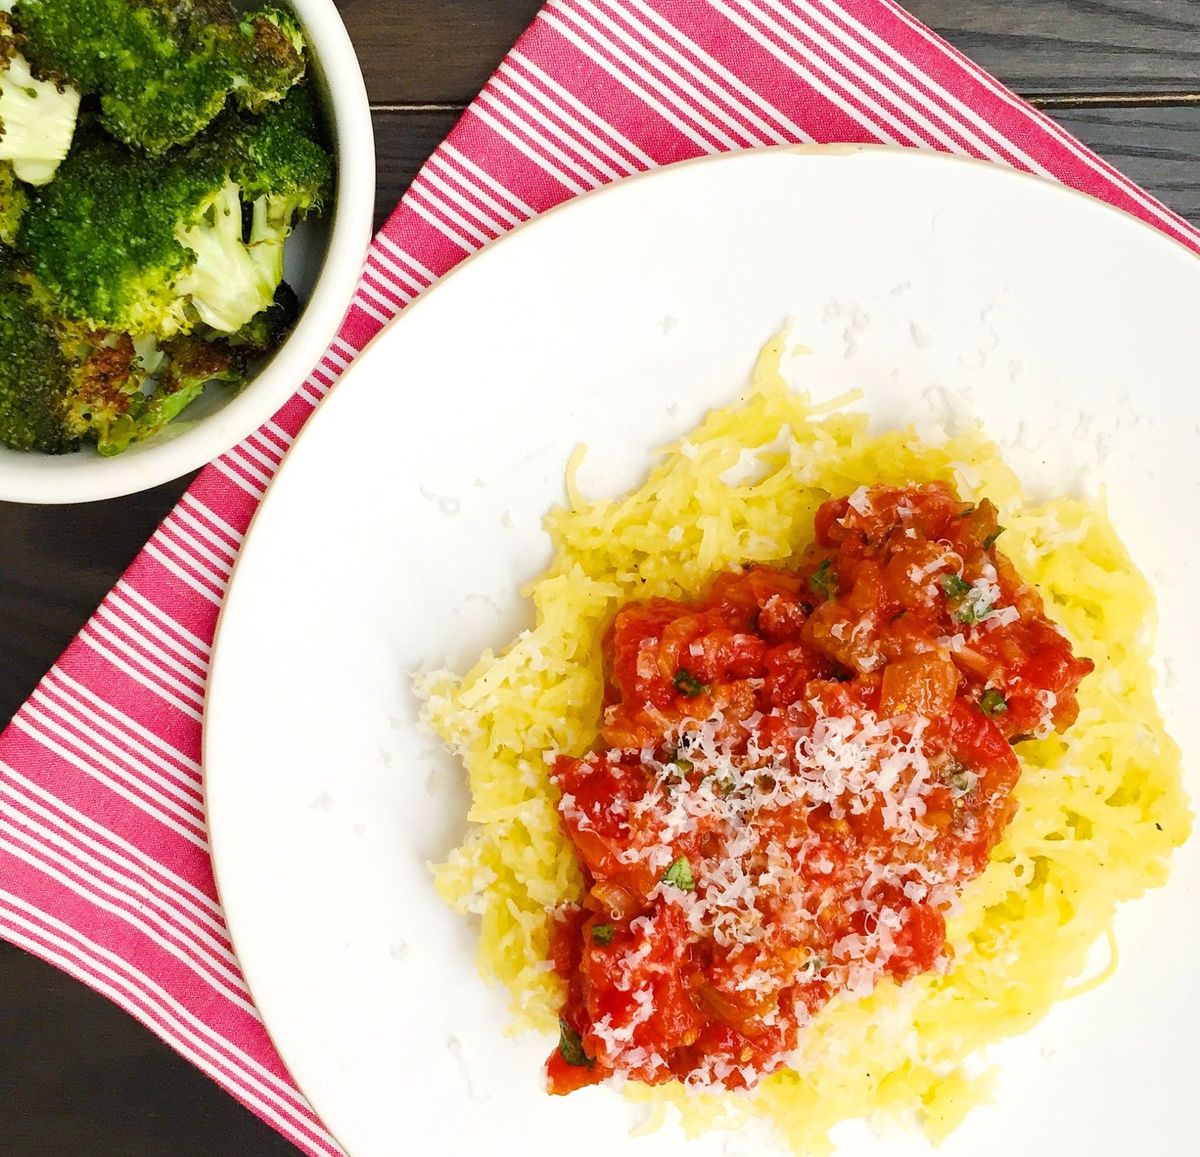 parmesan spaghetti squash with tomato sauce and roasted broccoli